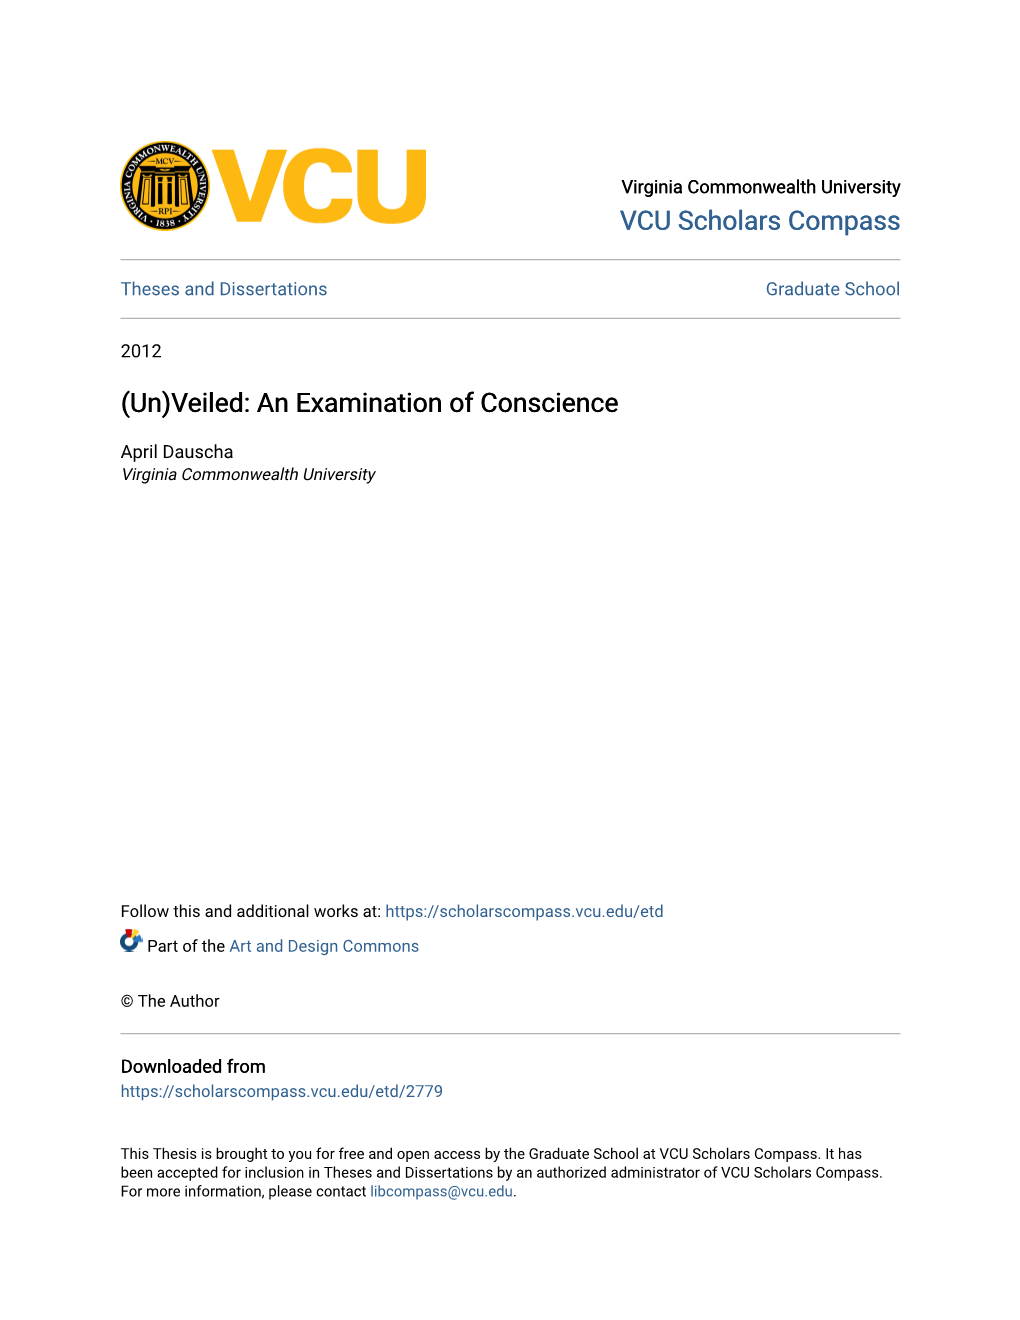 (Un)Veiled: an Examination of Conscience